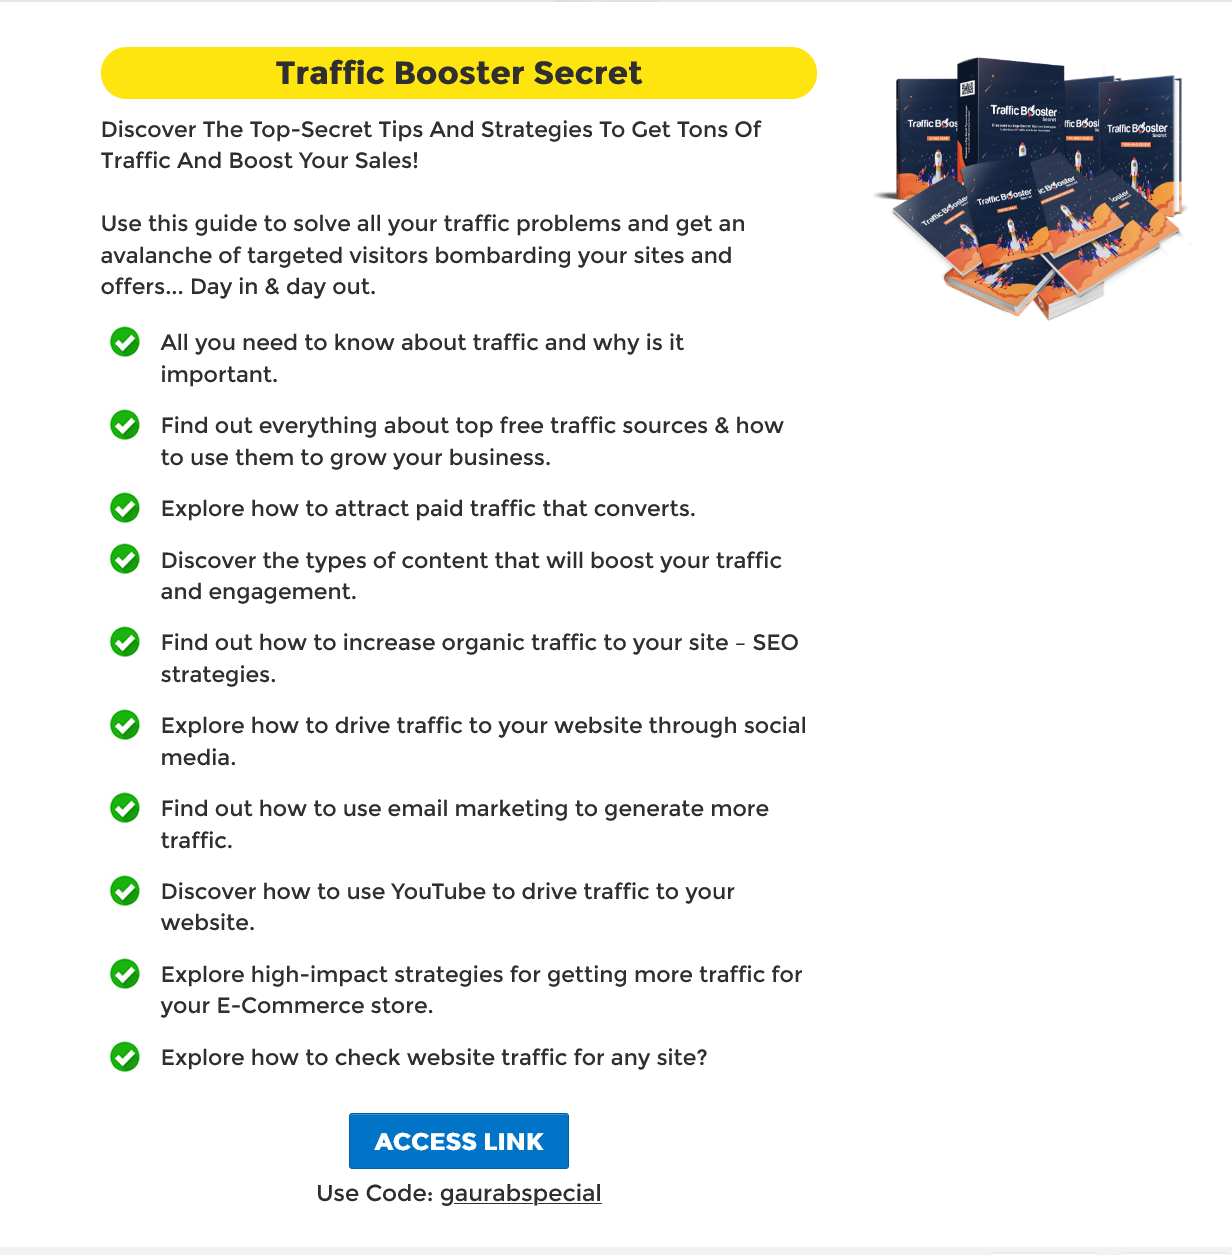 Traffic Booster Secret